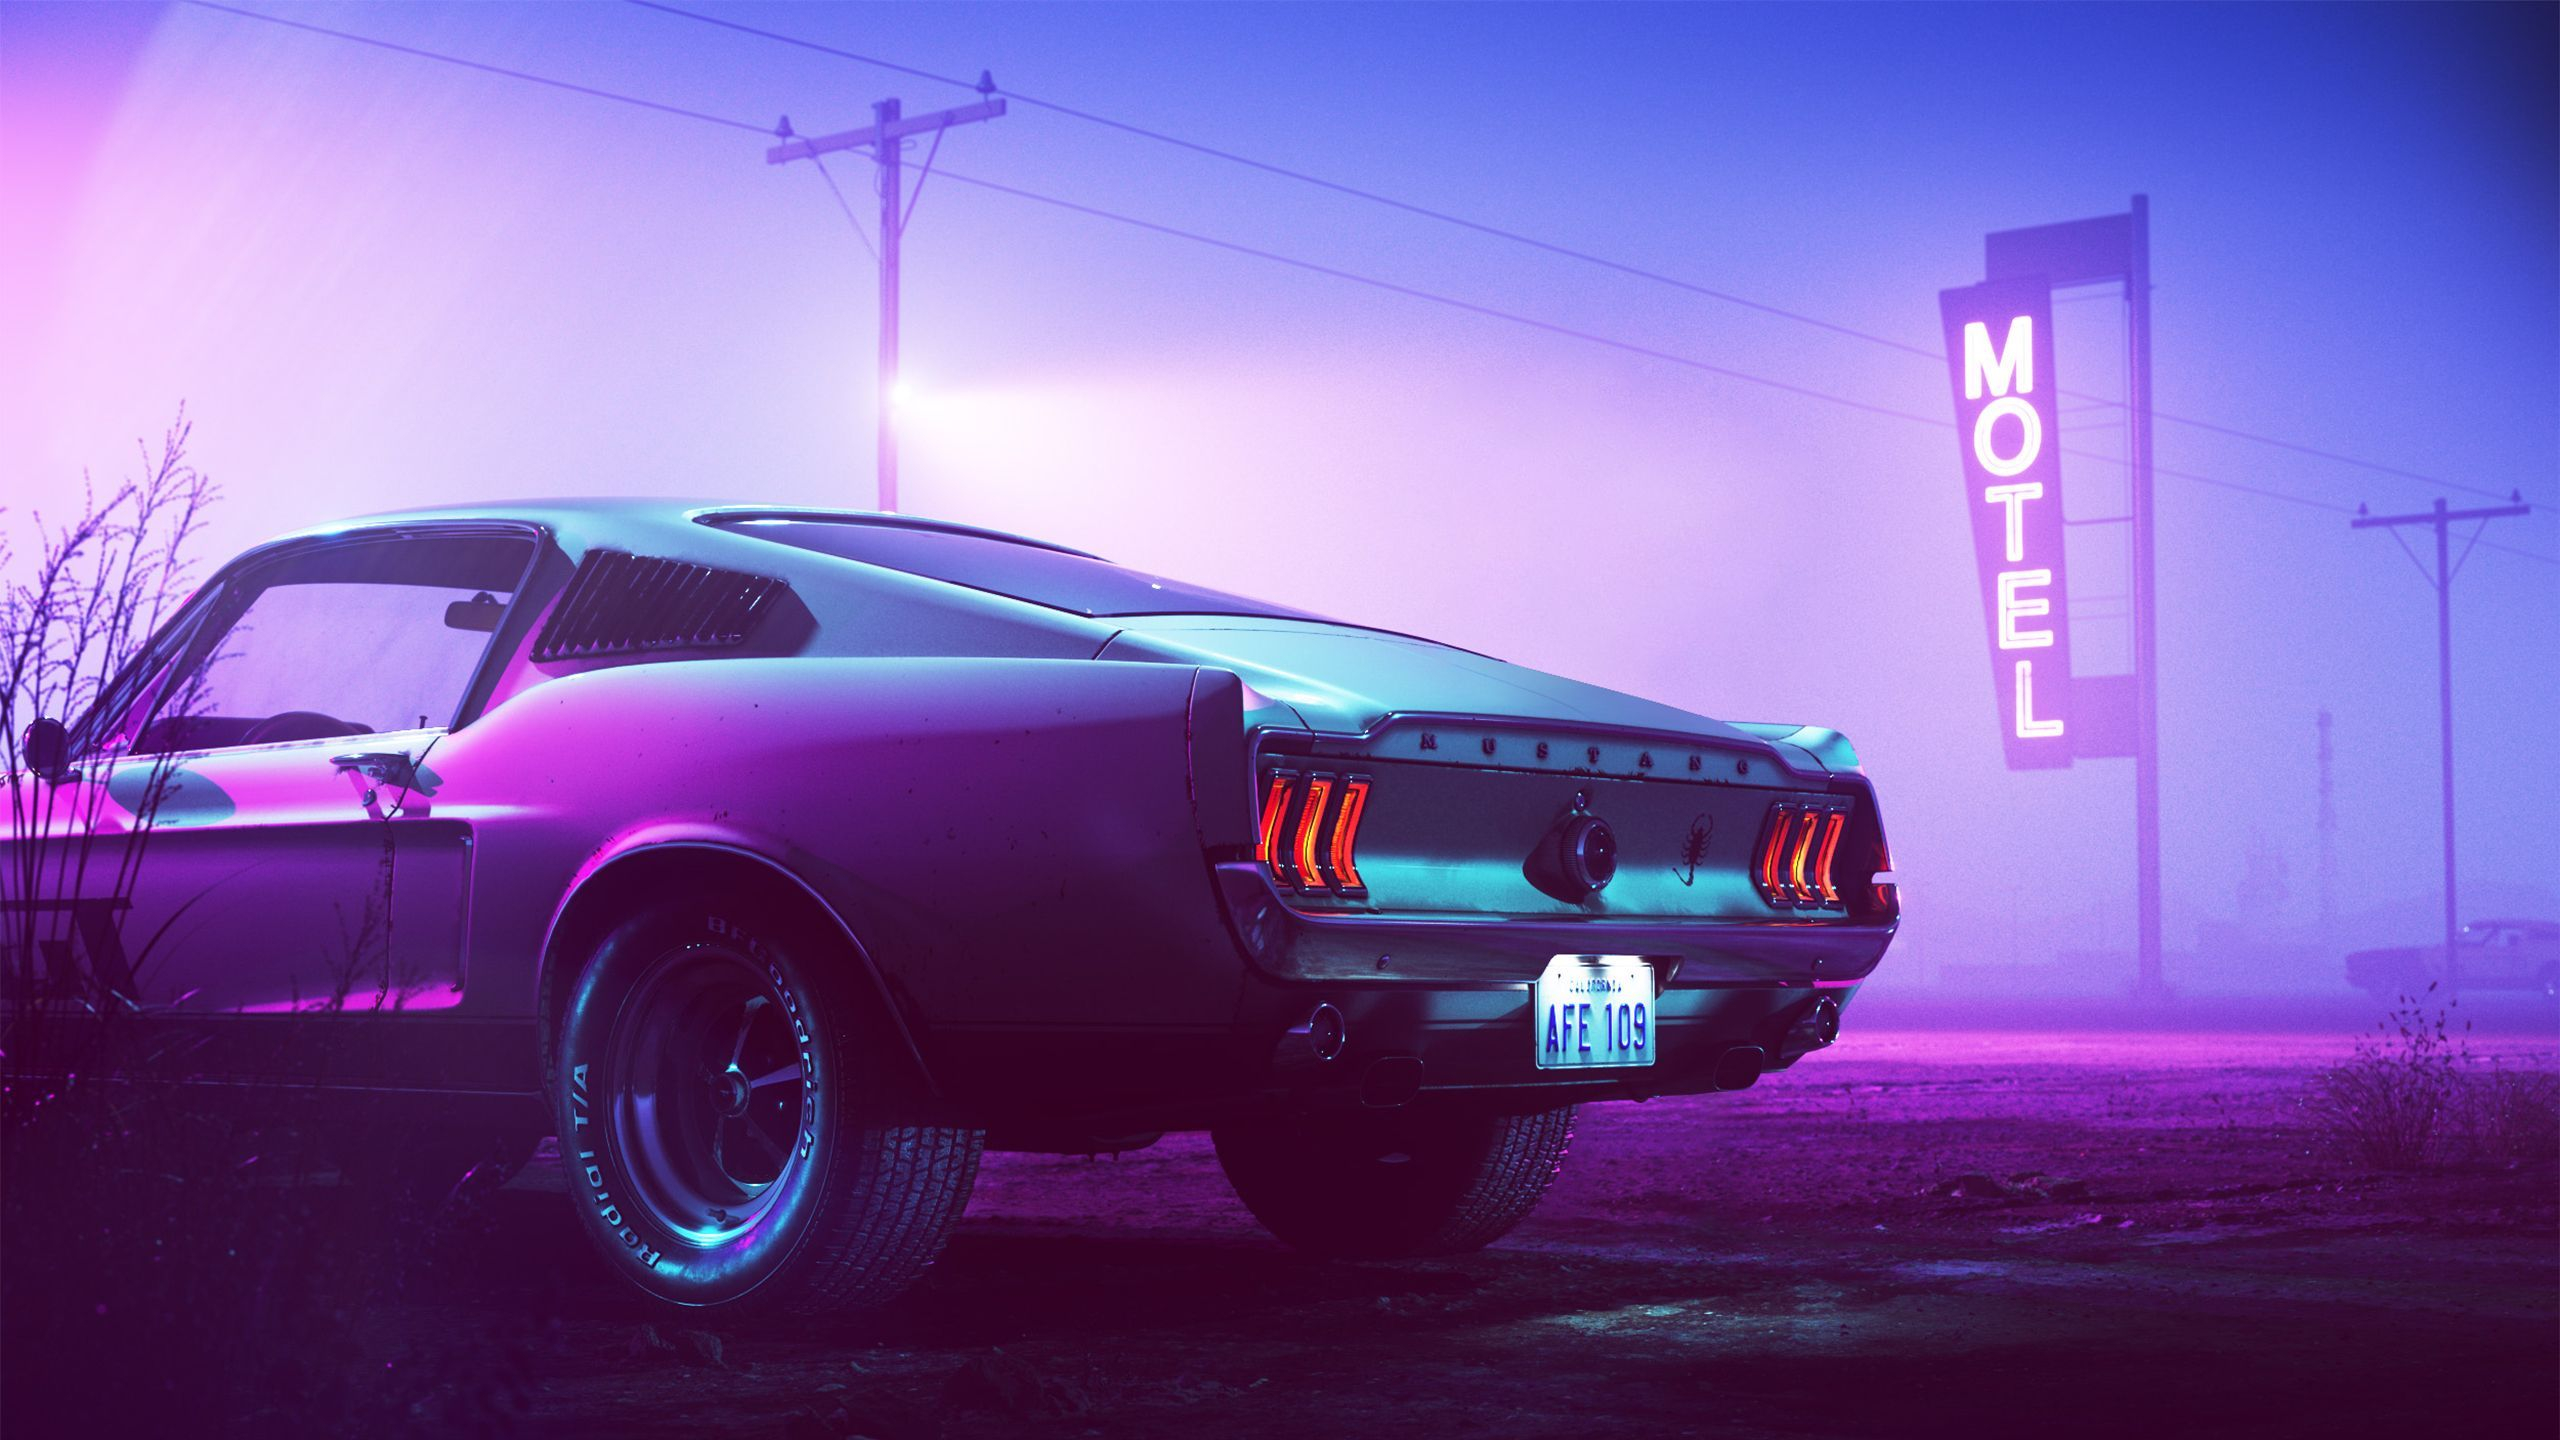 2560x1440 Neon Mustang Wallpapers Top Free Neon Mustang Backgrounds